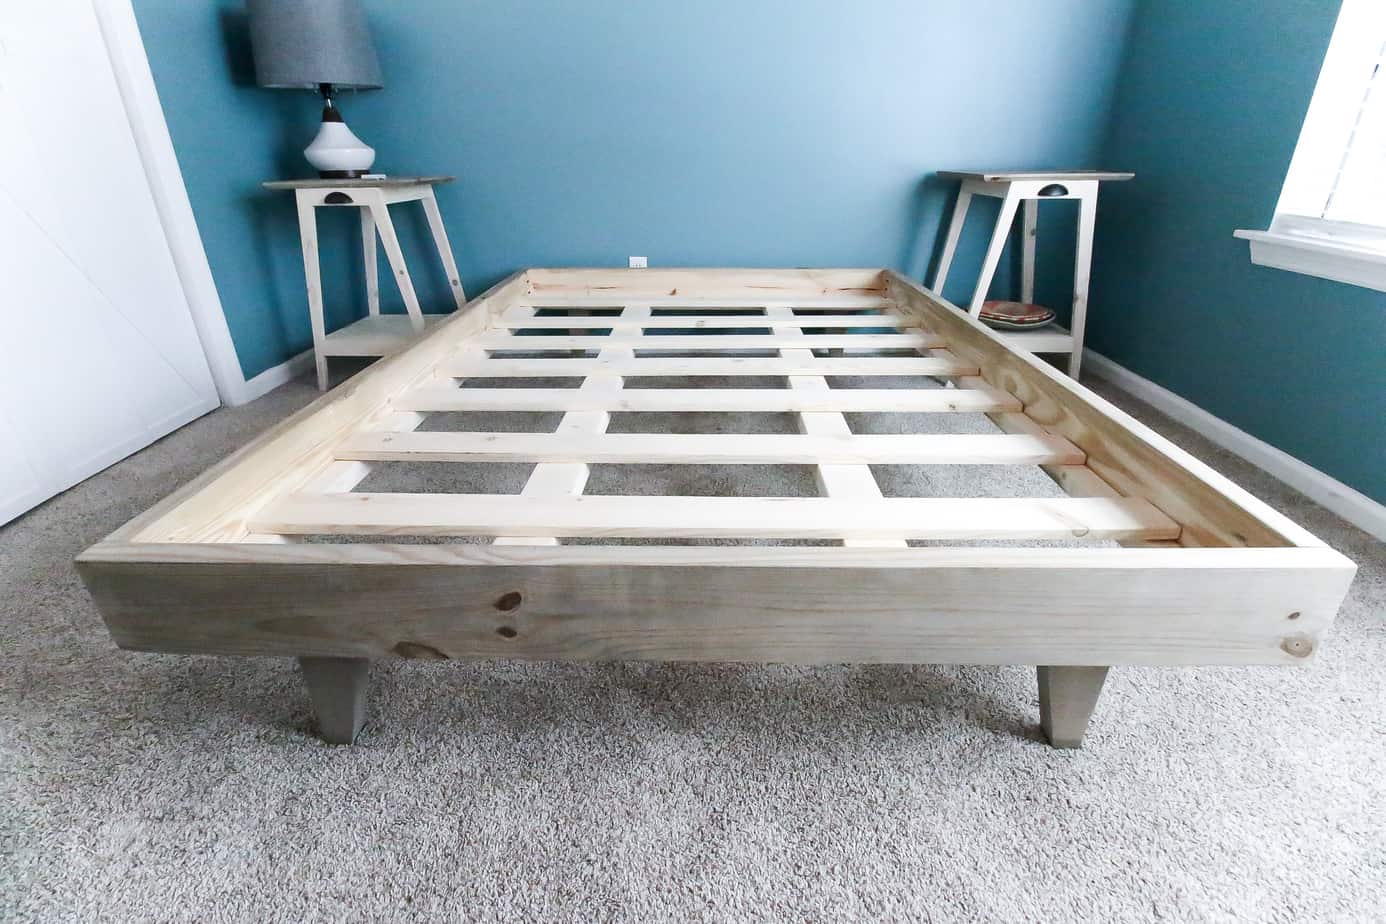 How To Build A Platform Bed For 50, Simple King Size Bed Frame Diy Plans